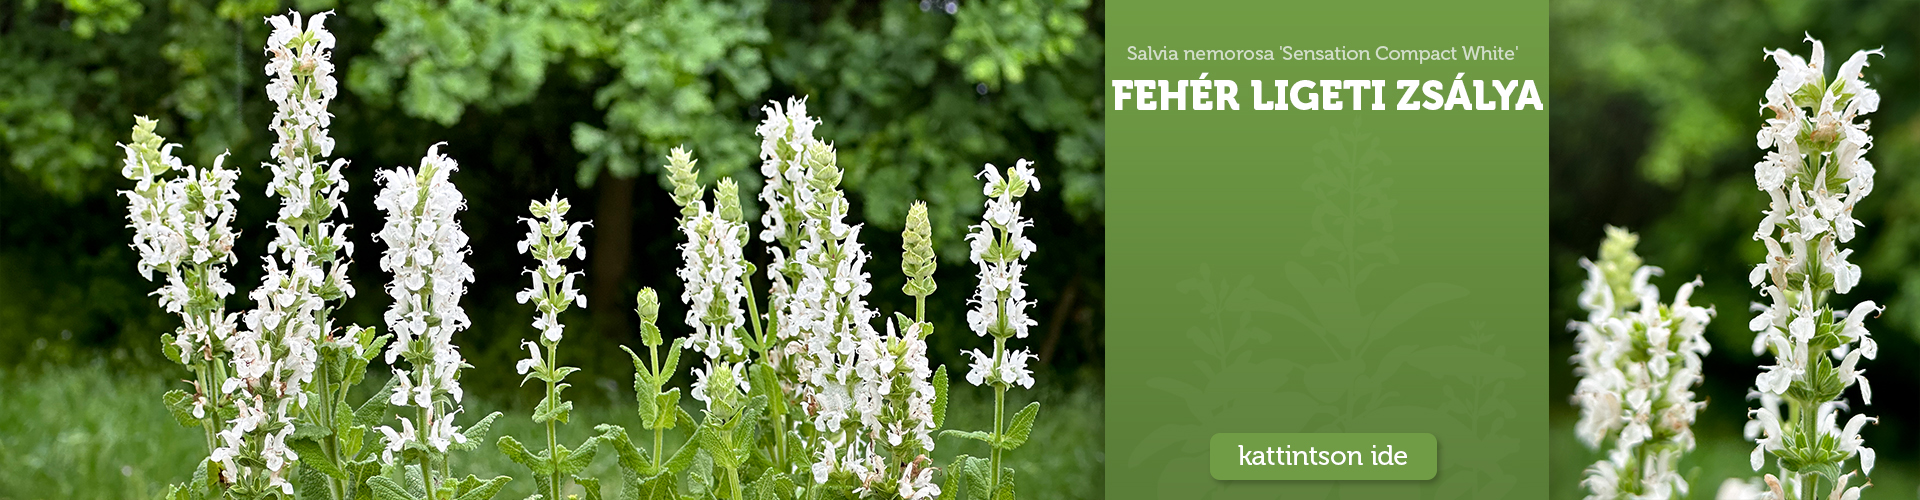 Salvia nemorosa 'Sensation Compact White' - Fehér ligeti zsálya